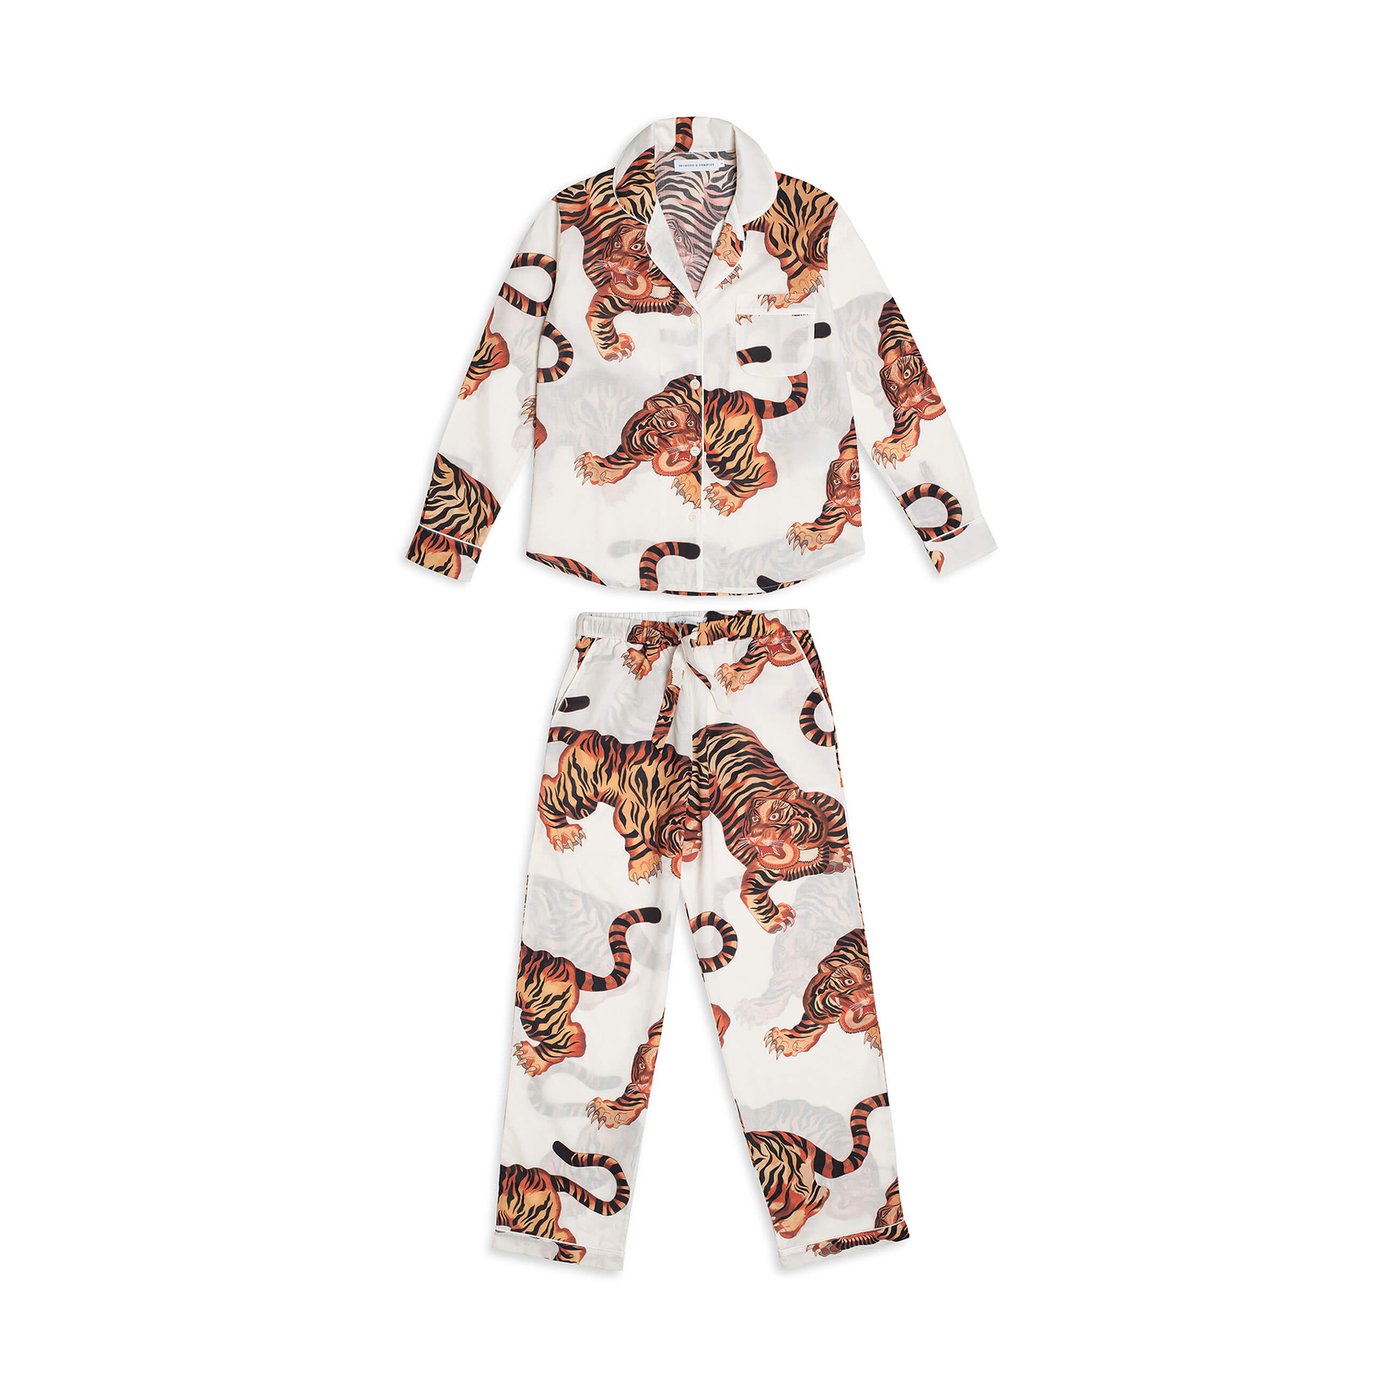 Desmond & Dempsey Men's Pocket Pajama Set